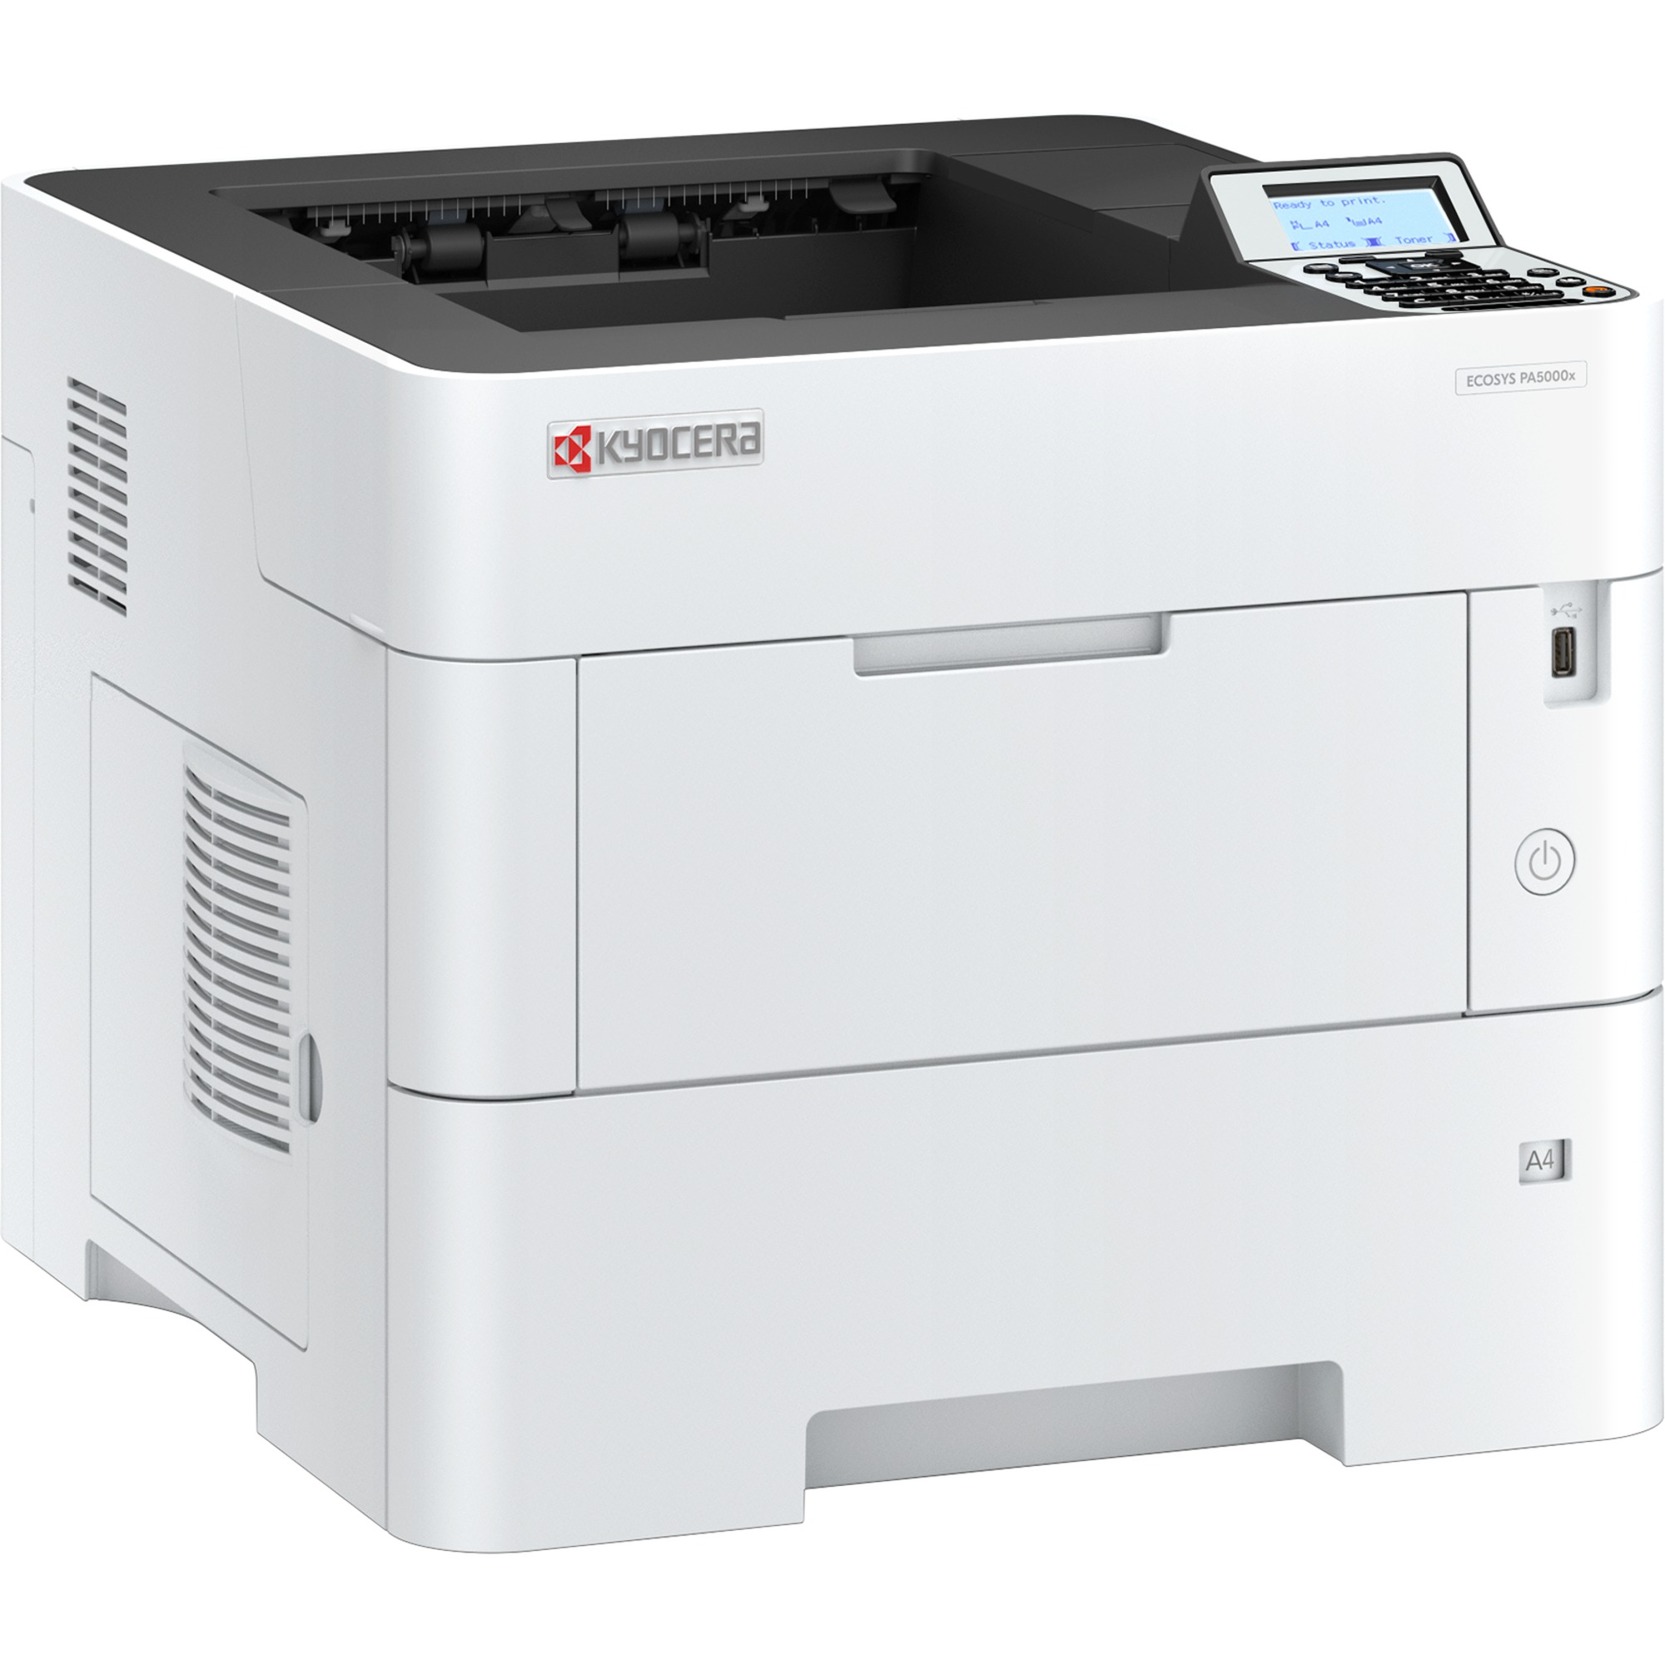 ECOSYS PA5000x, Laserdrucker von Kyocera